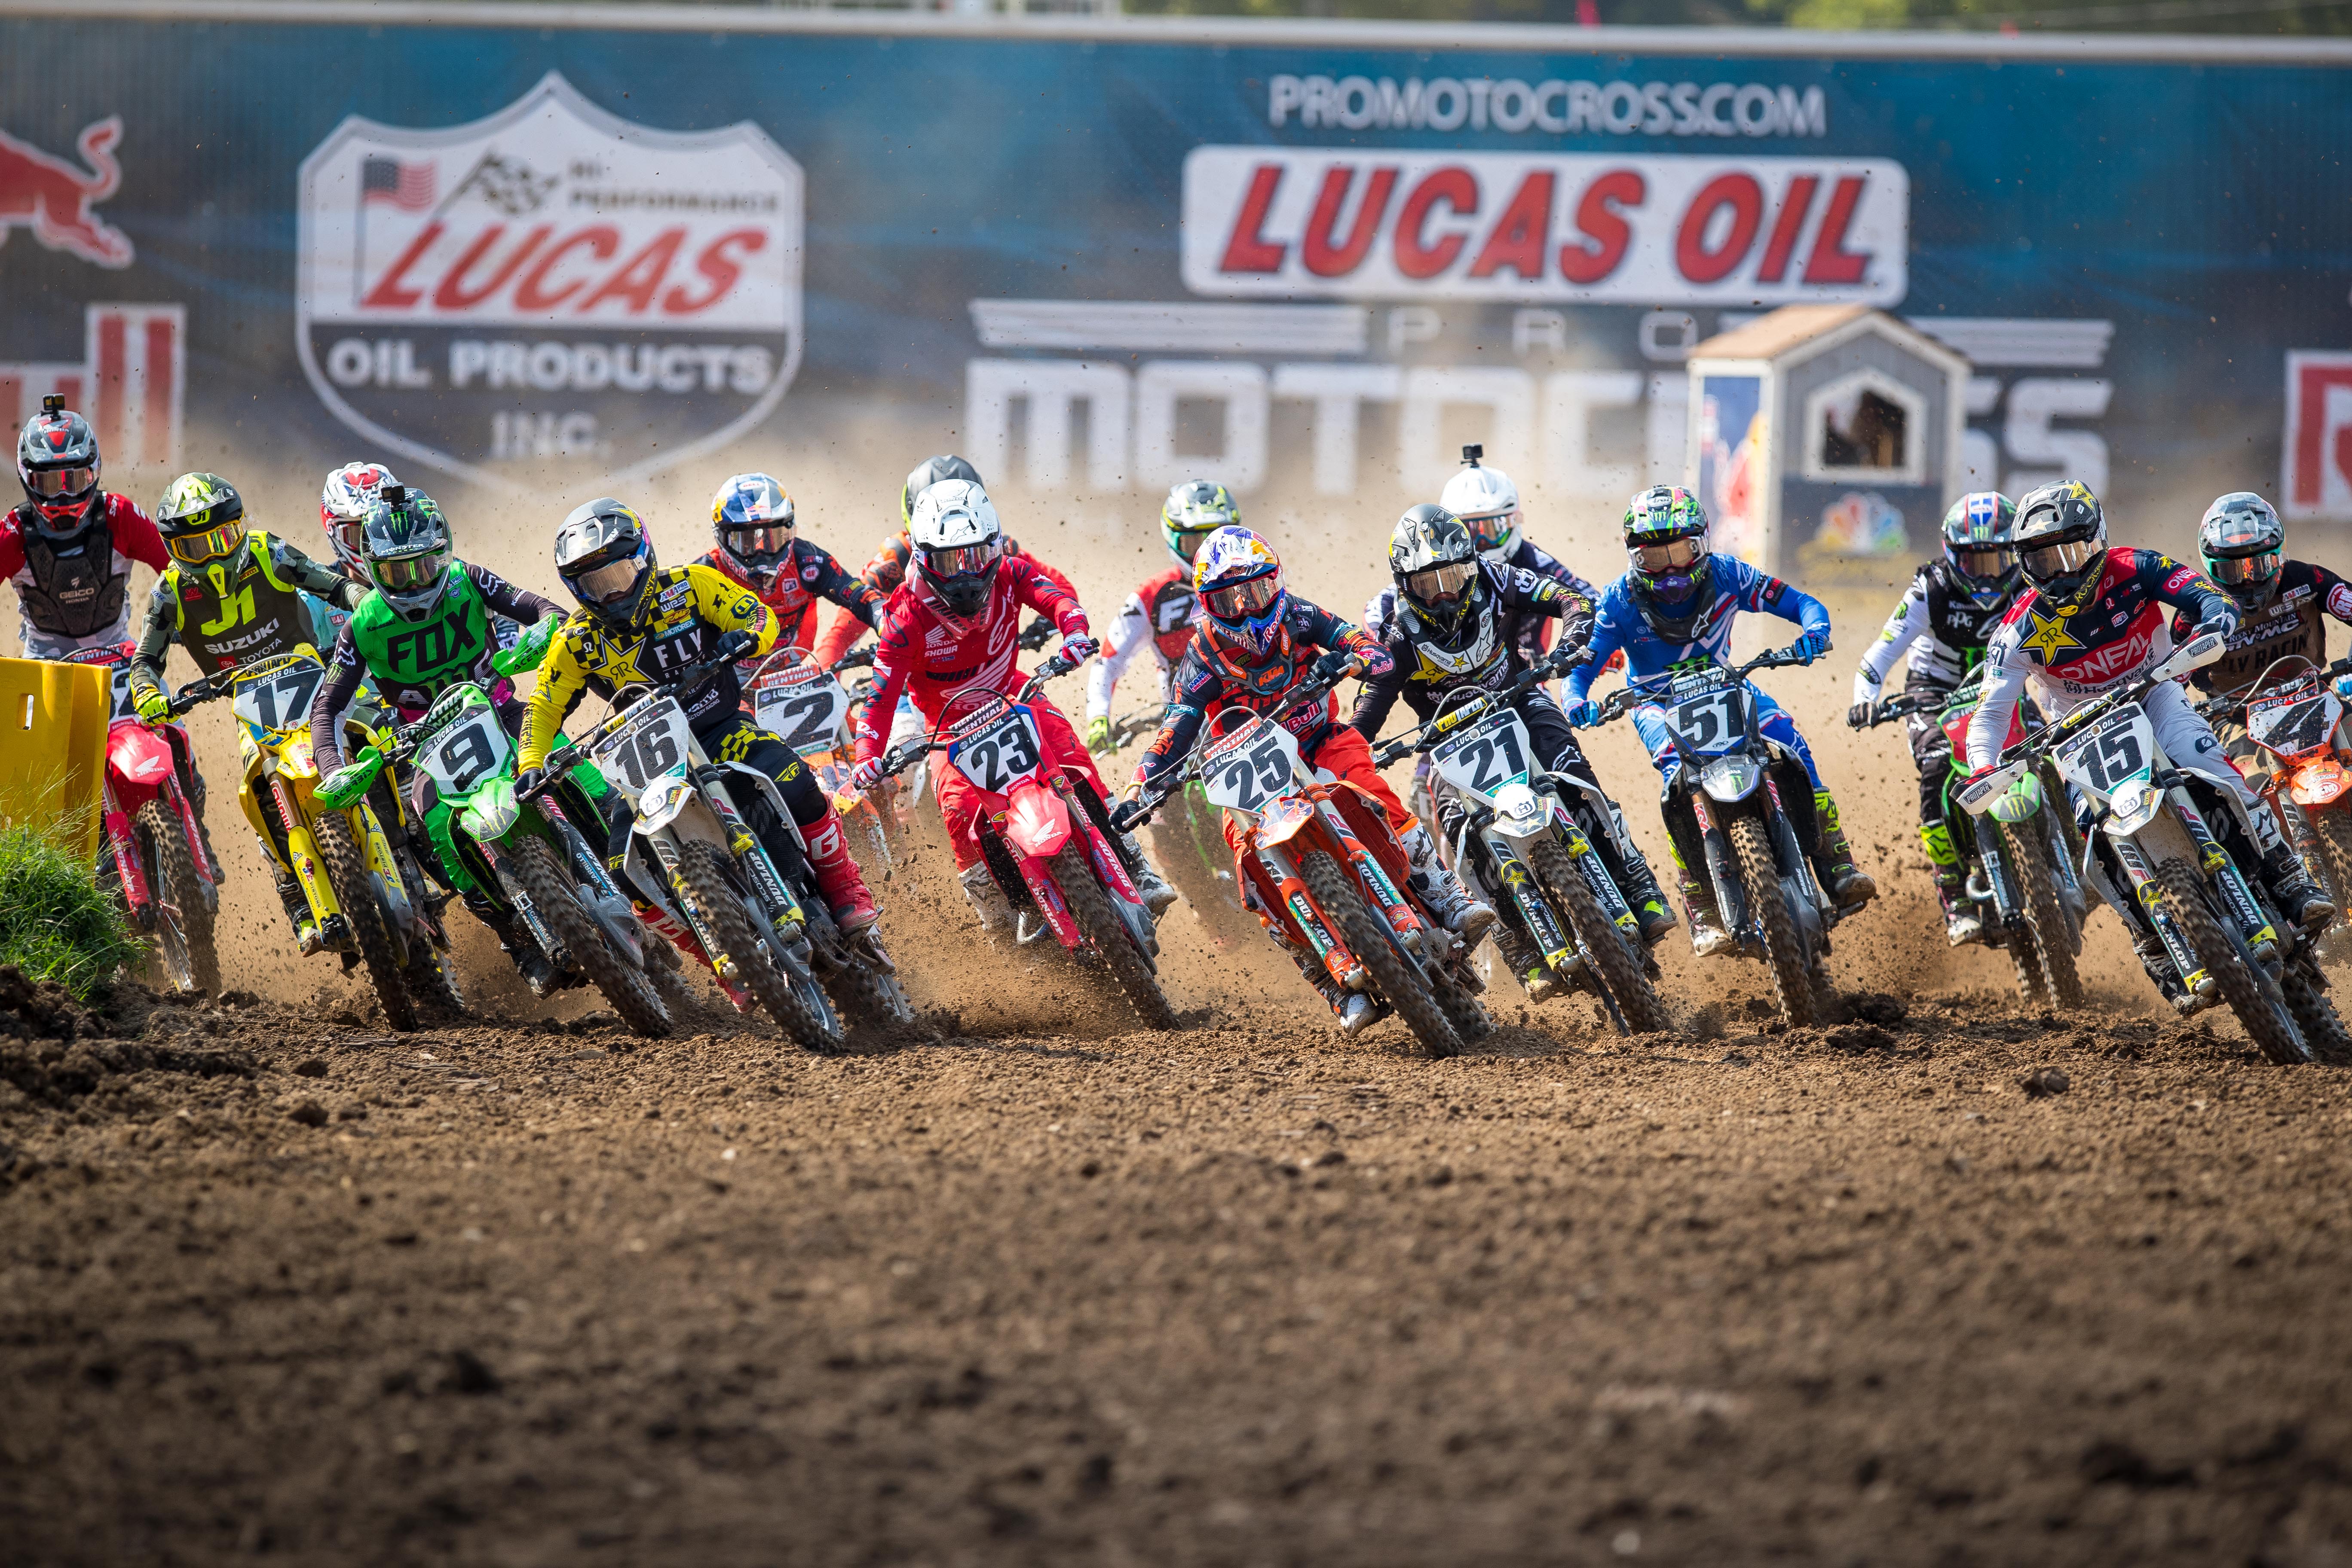 Stream Every Moto Live & On-Demand - Lucas Oil Pro Motocross Championship